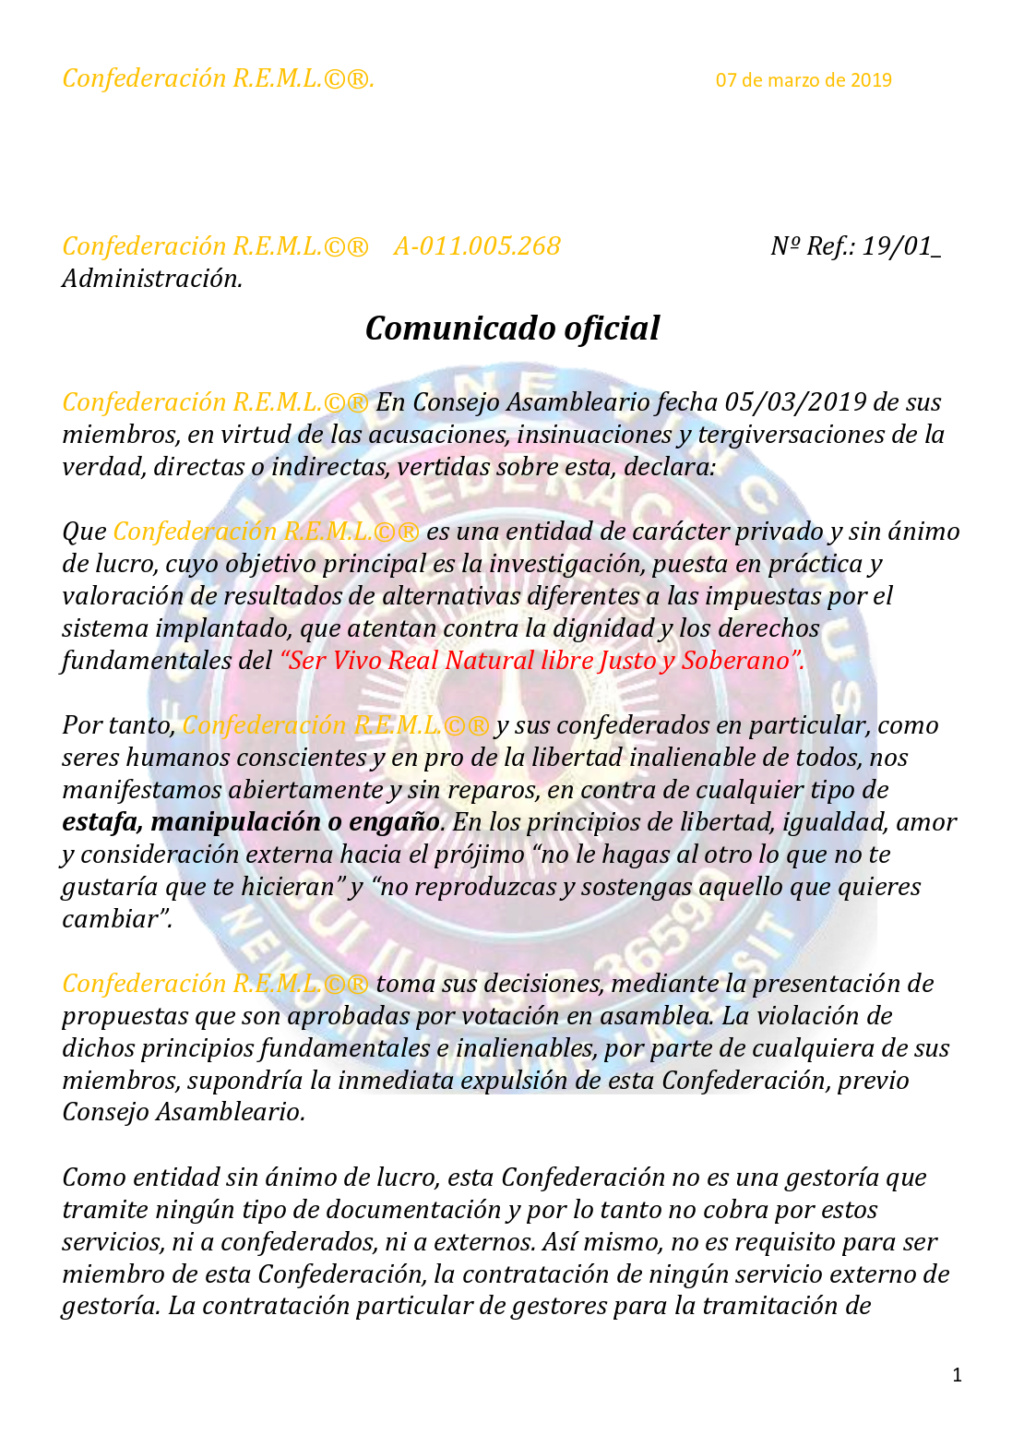 Confederanción REML comunicados oficiales Zyndic13